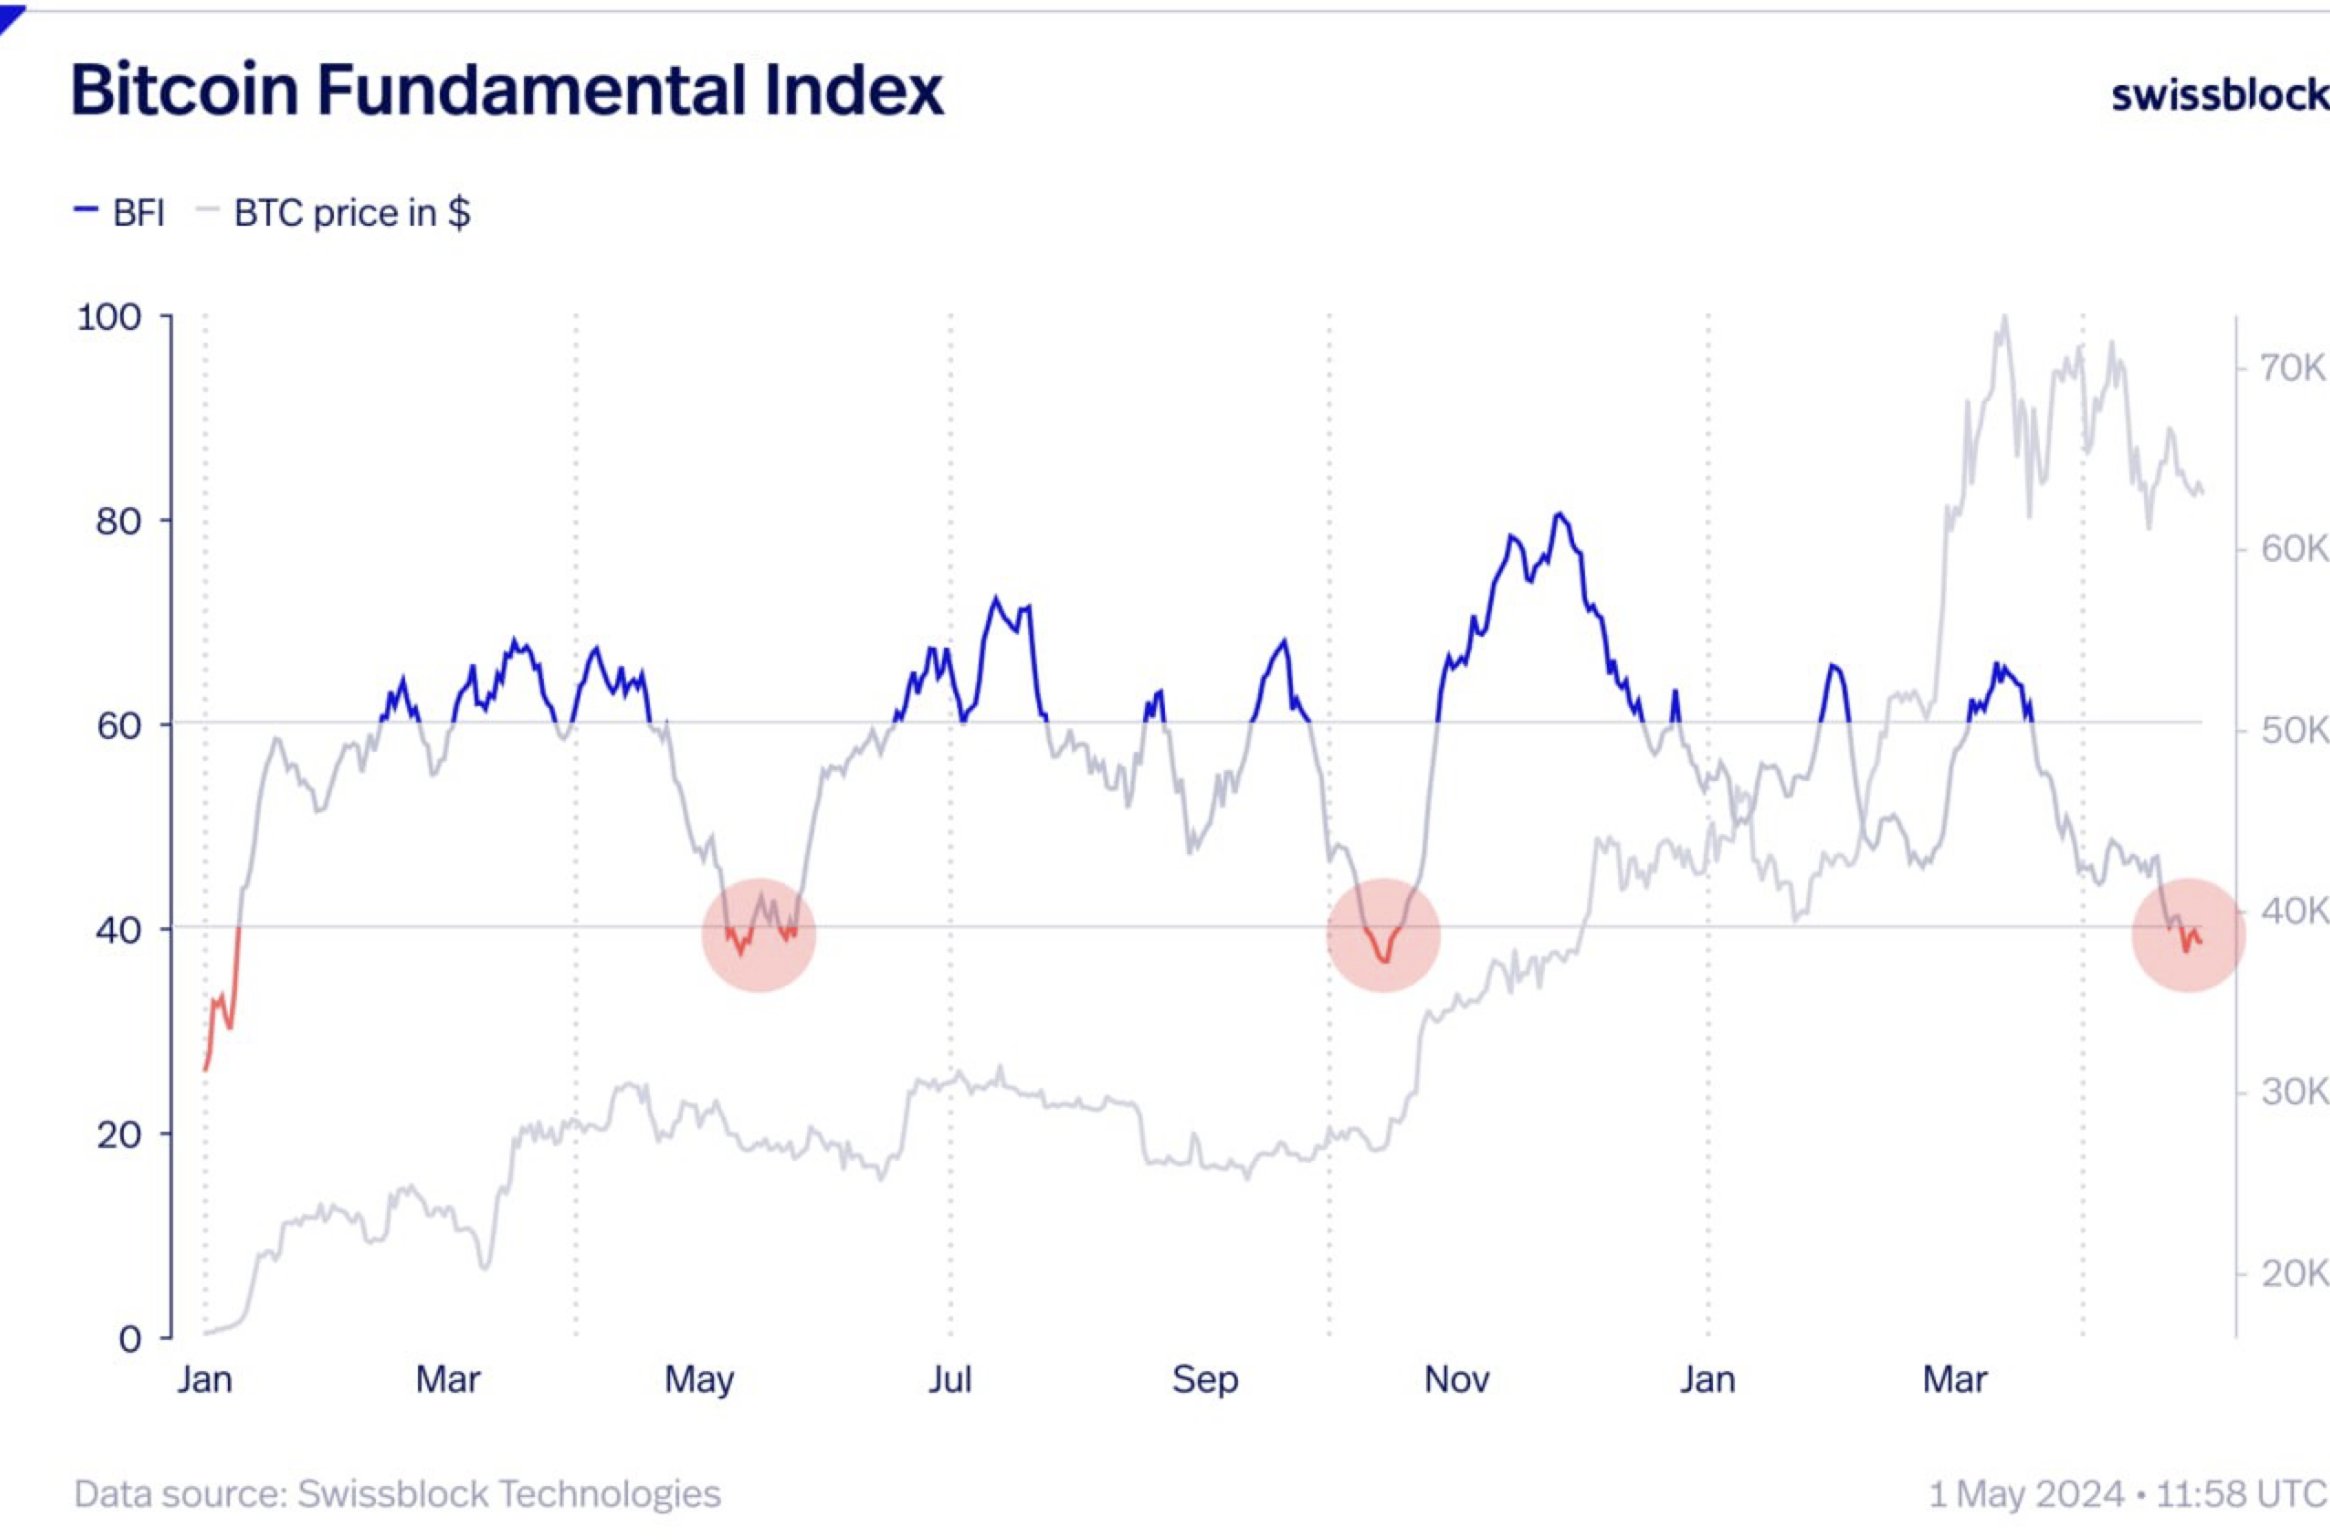 Chỉ số Bitcoin Fundamental Index của Swissblock